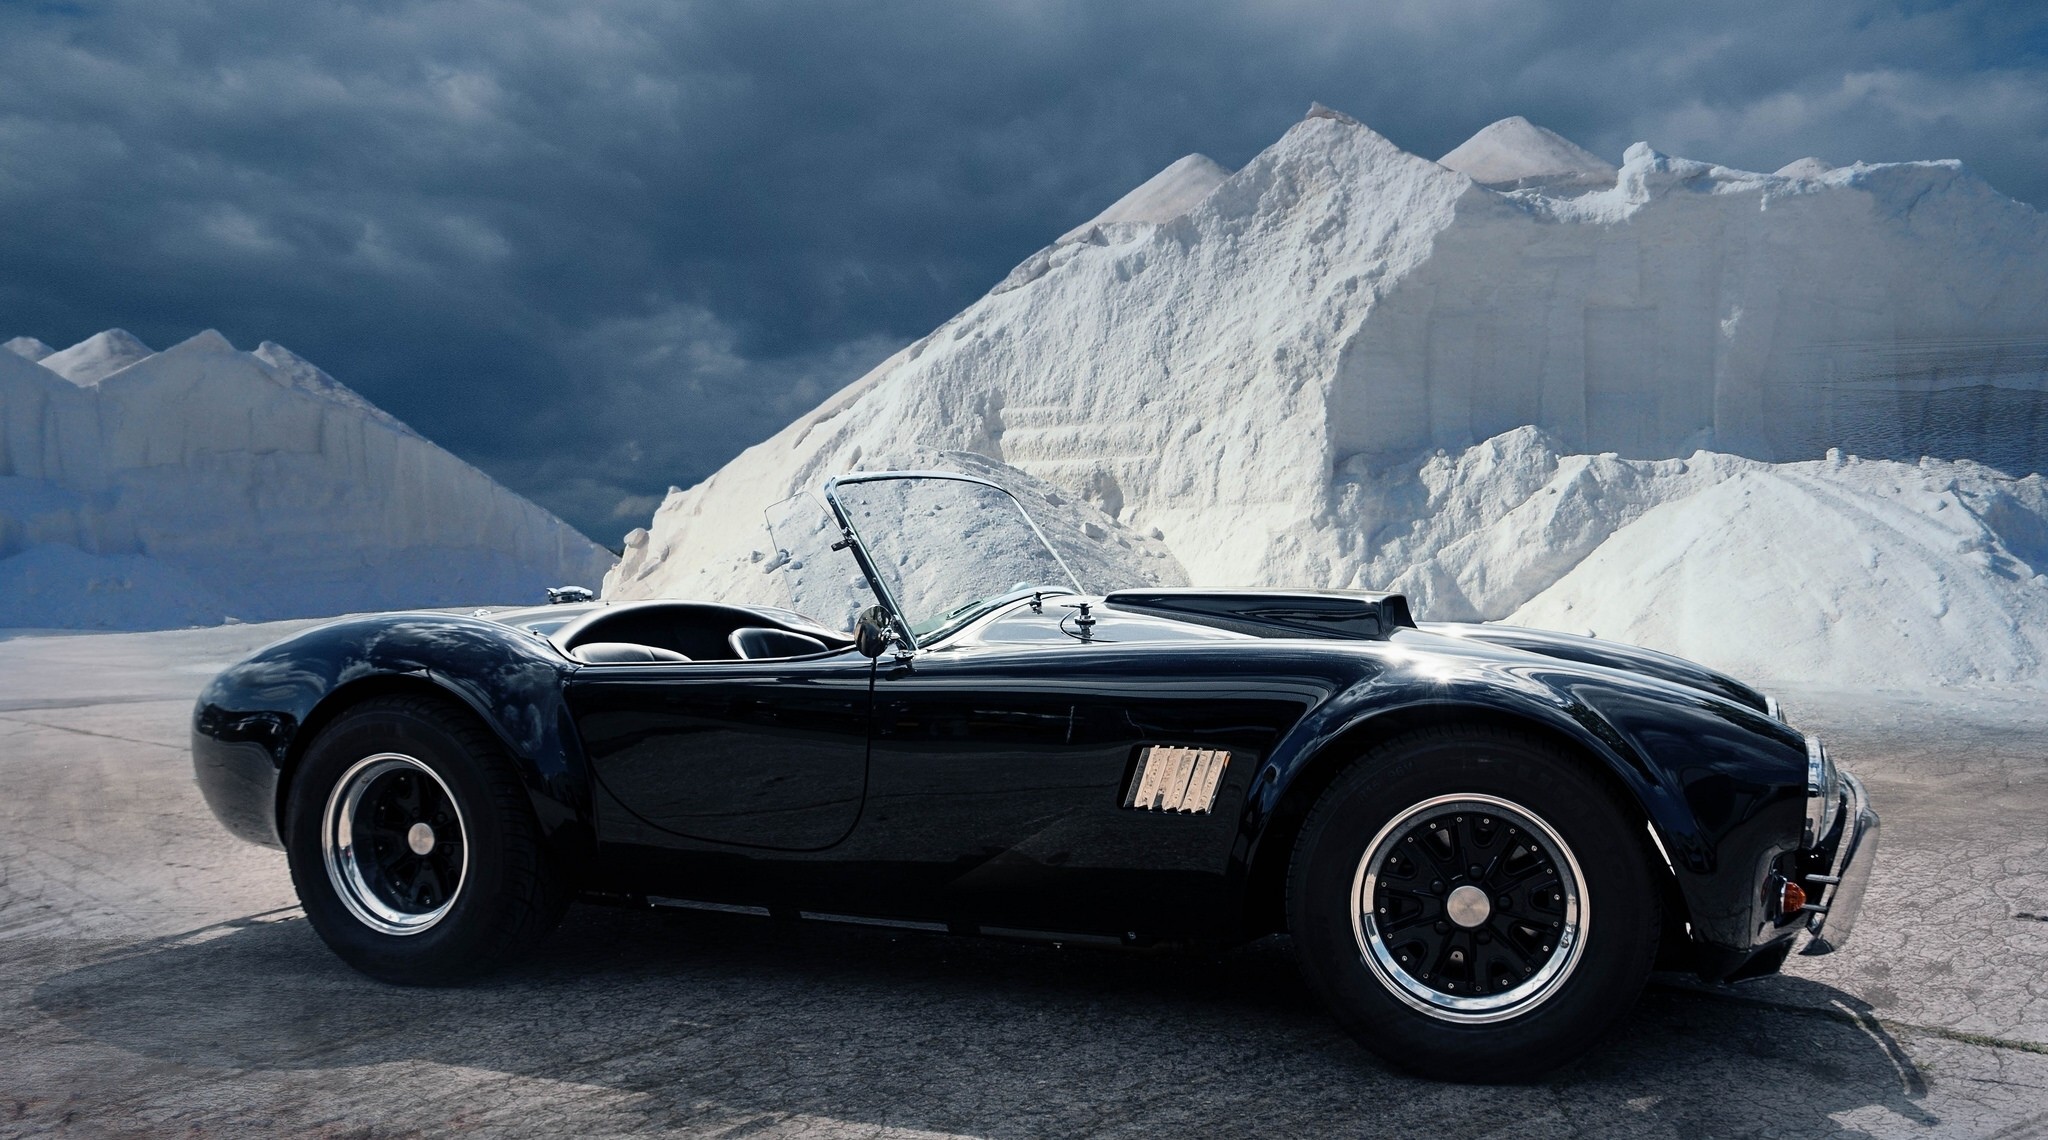 2048x1140 Ac Cobra, Black, Side View, Cars, Winter, Snow